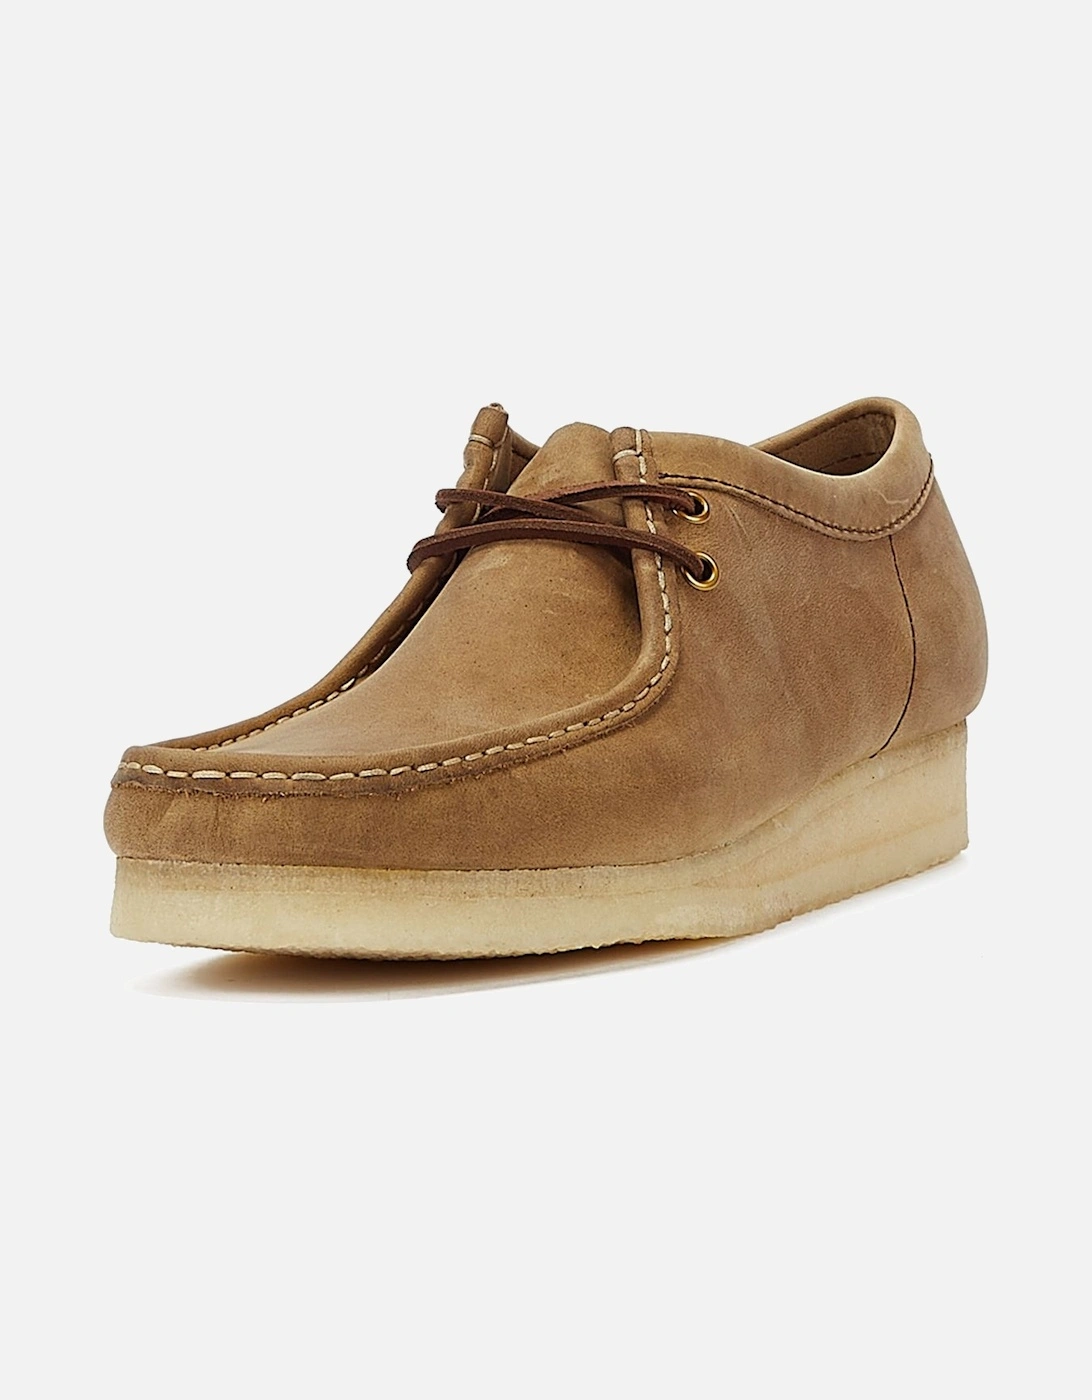 Originals Wallabee Men's Brown Leather Shoes